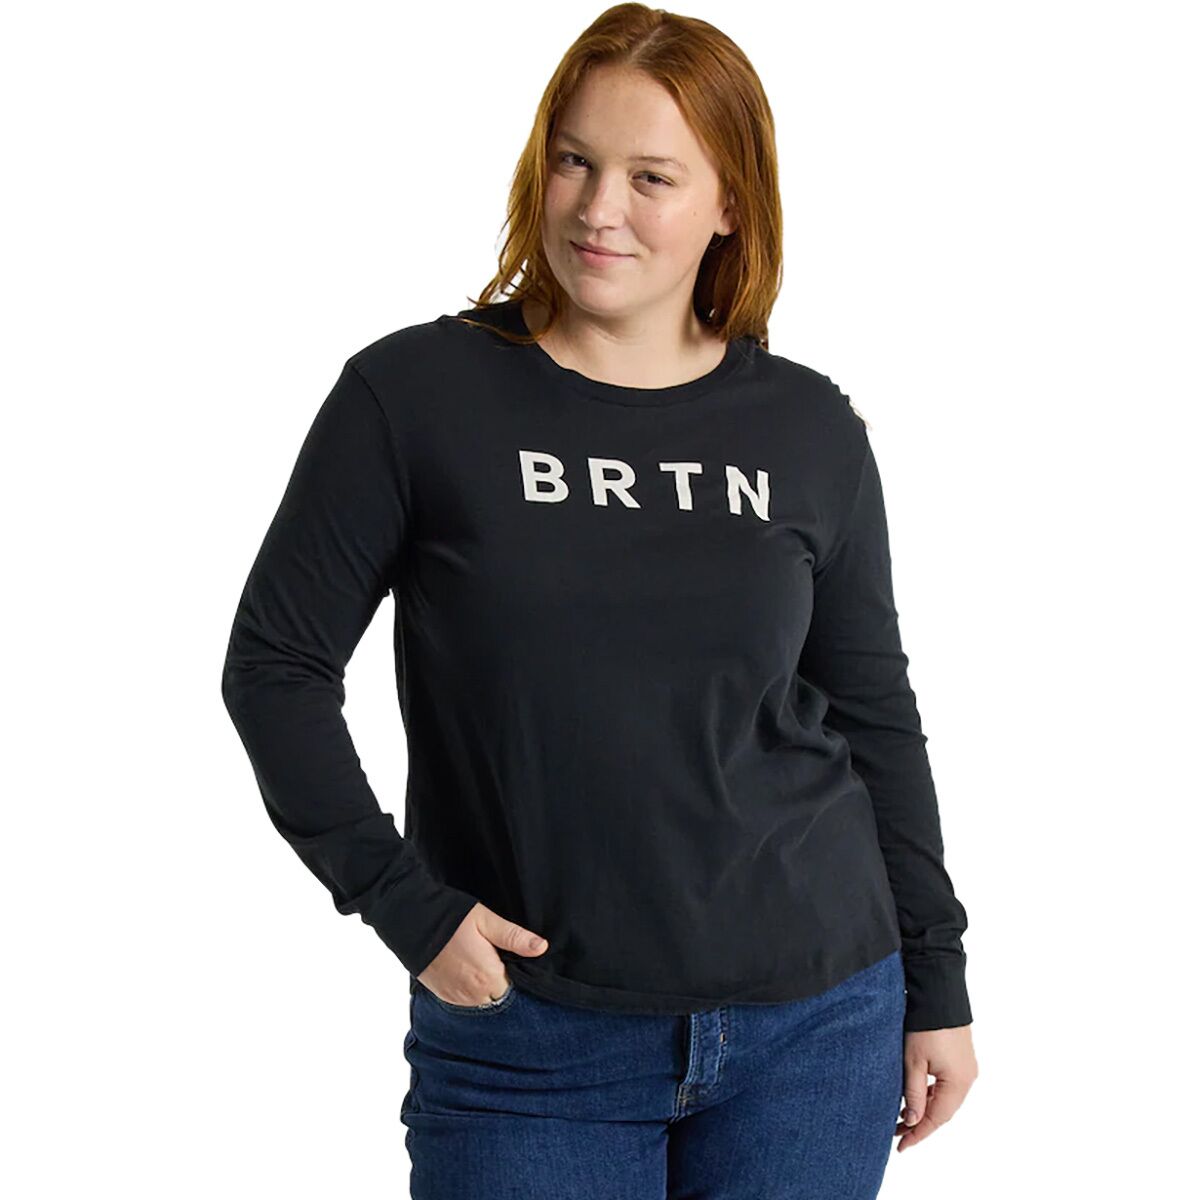 Burton BRTN Long-Sleeve T-Shirt - Women's